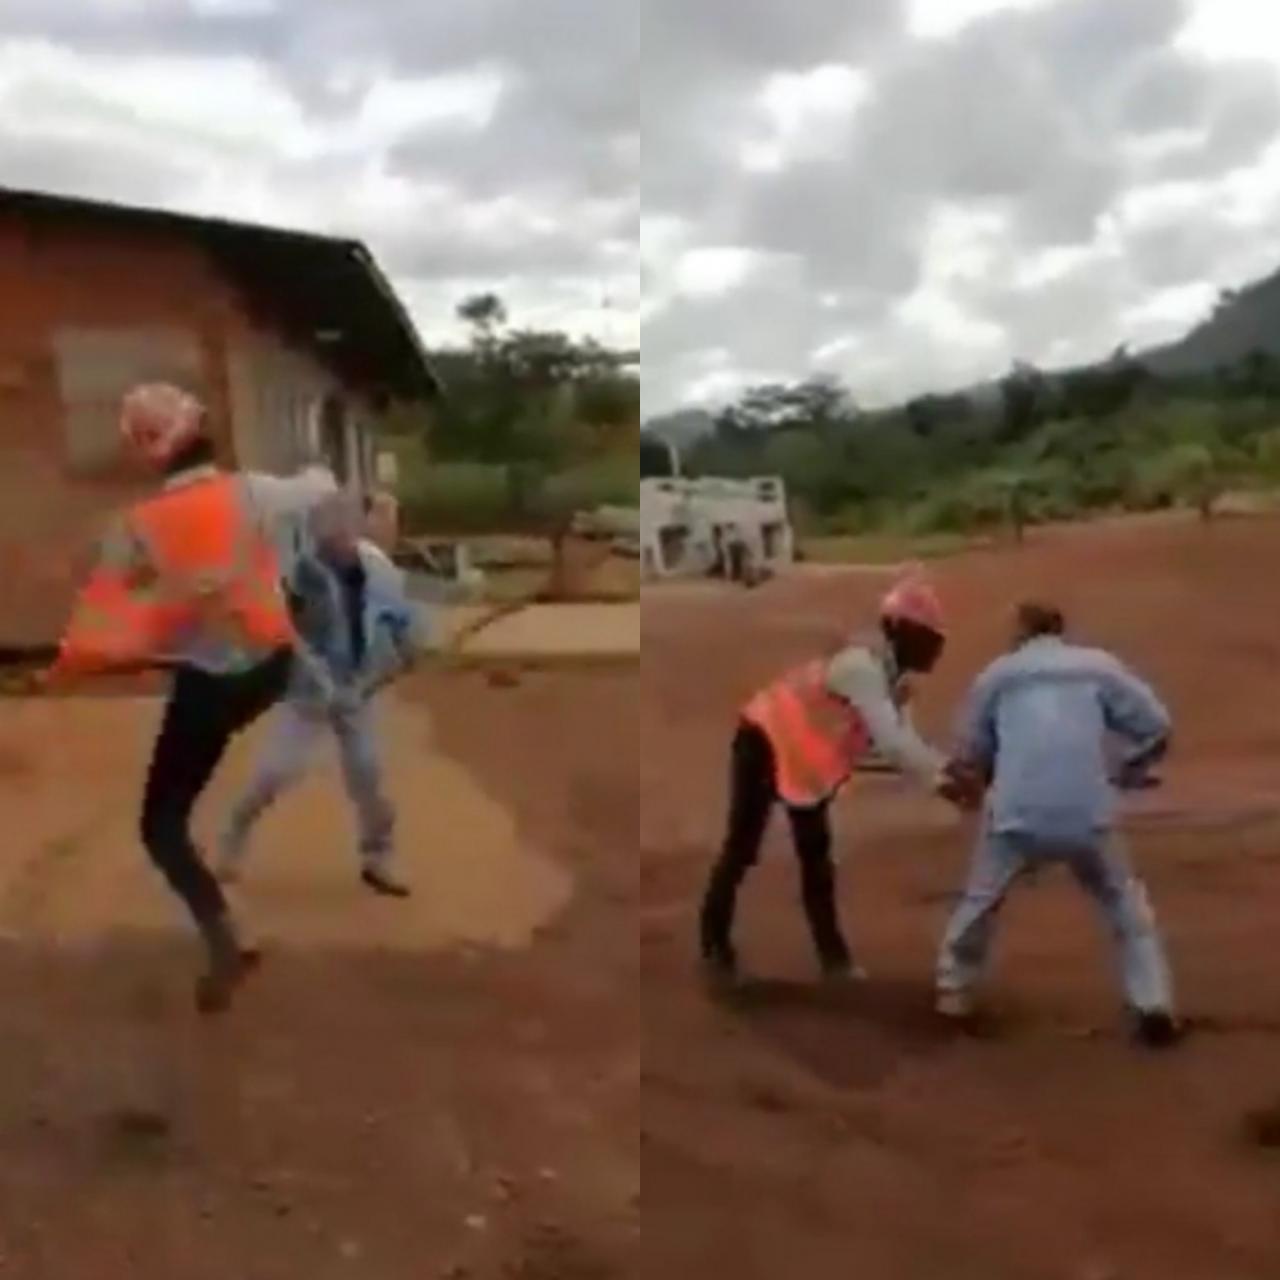 Chinese miner attacks Sierra Leonean man on mining site in Sierra Leone (video)